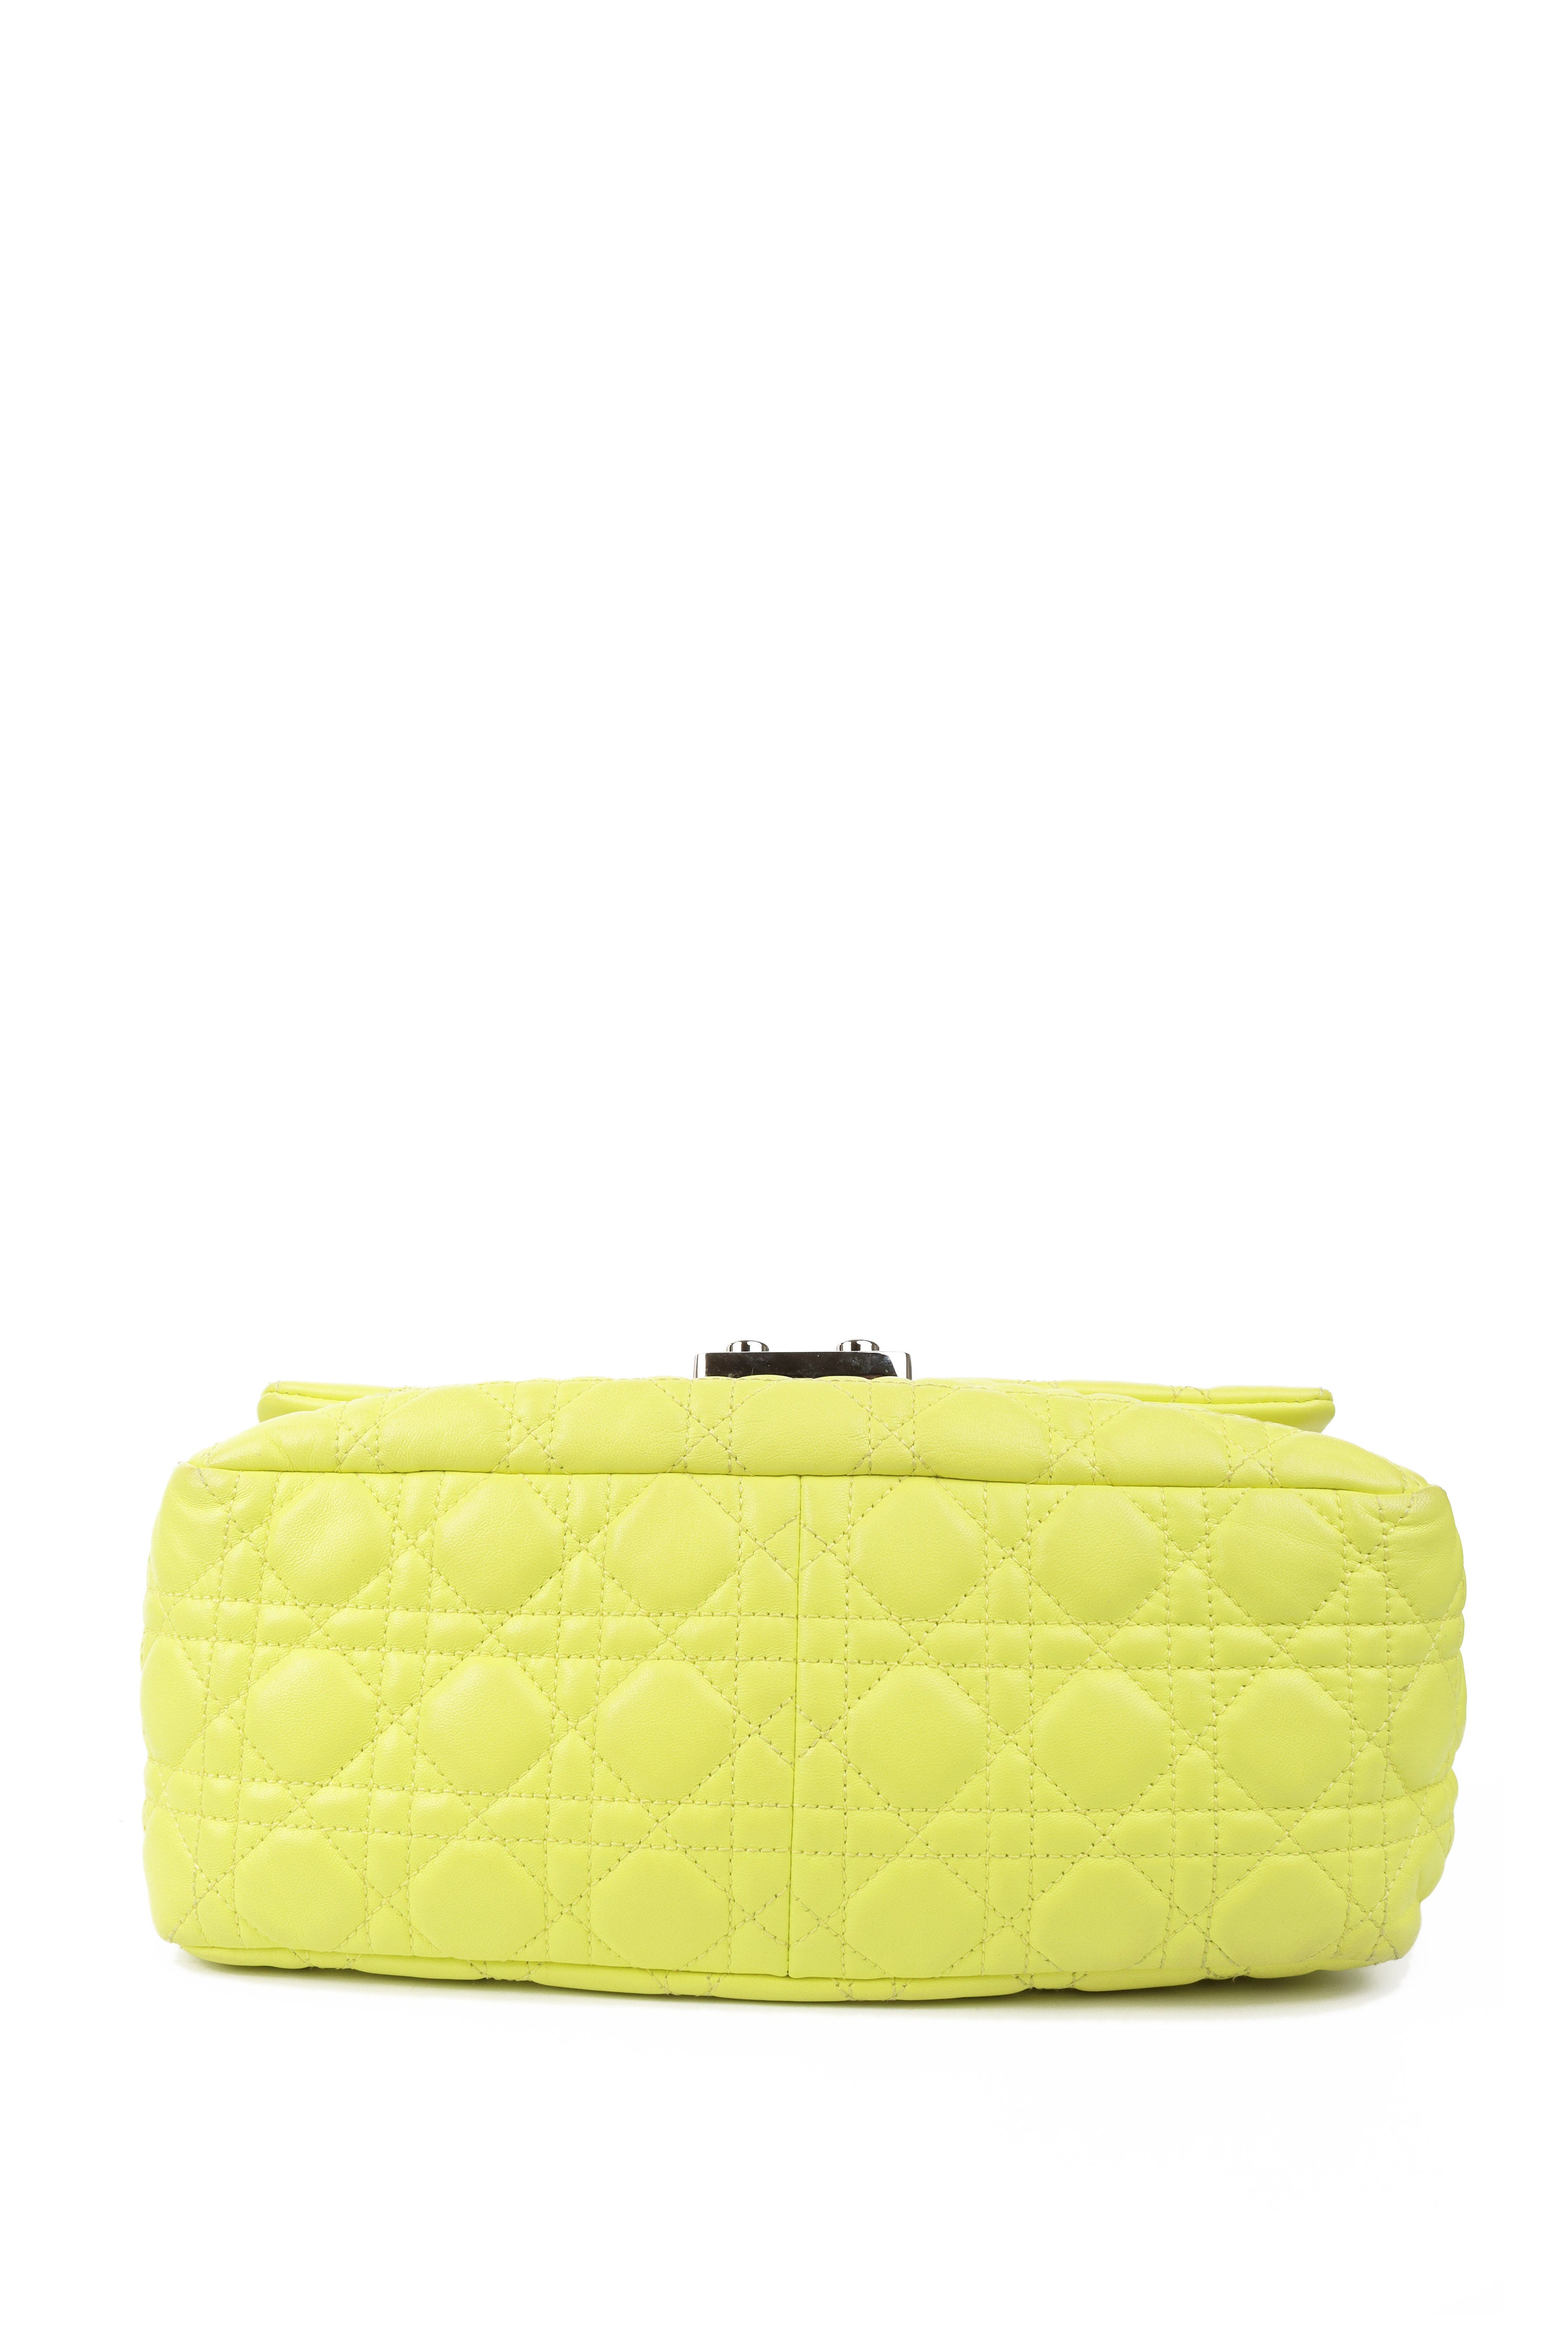 Dior Neon Yellow Miss Dior Flap Bag